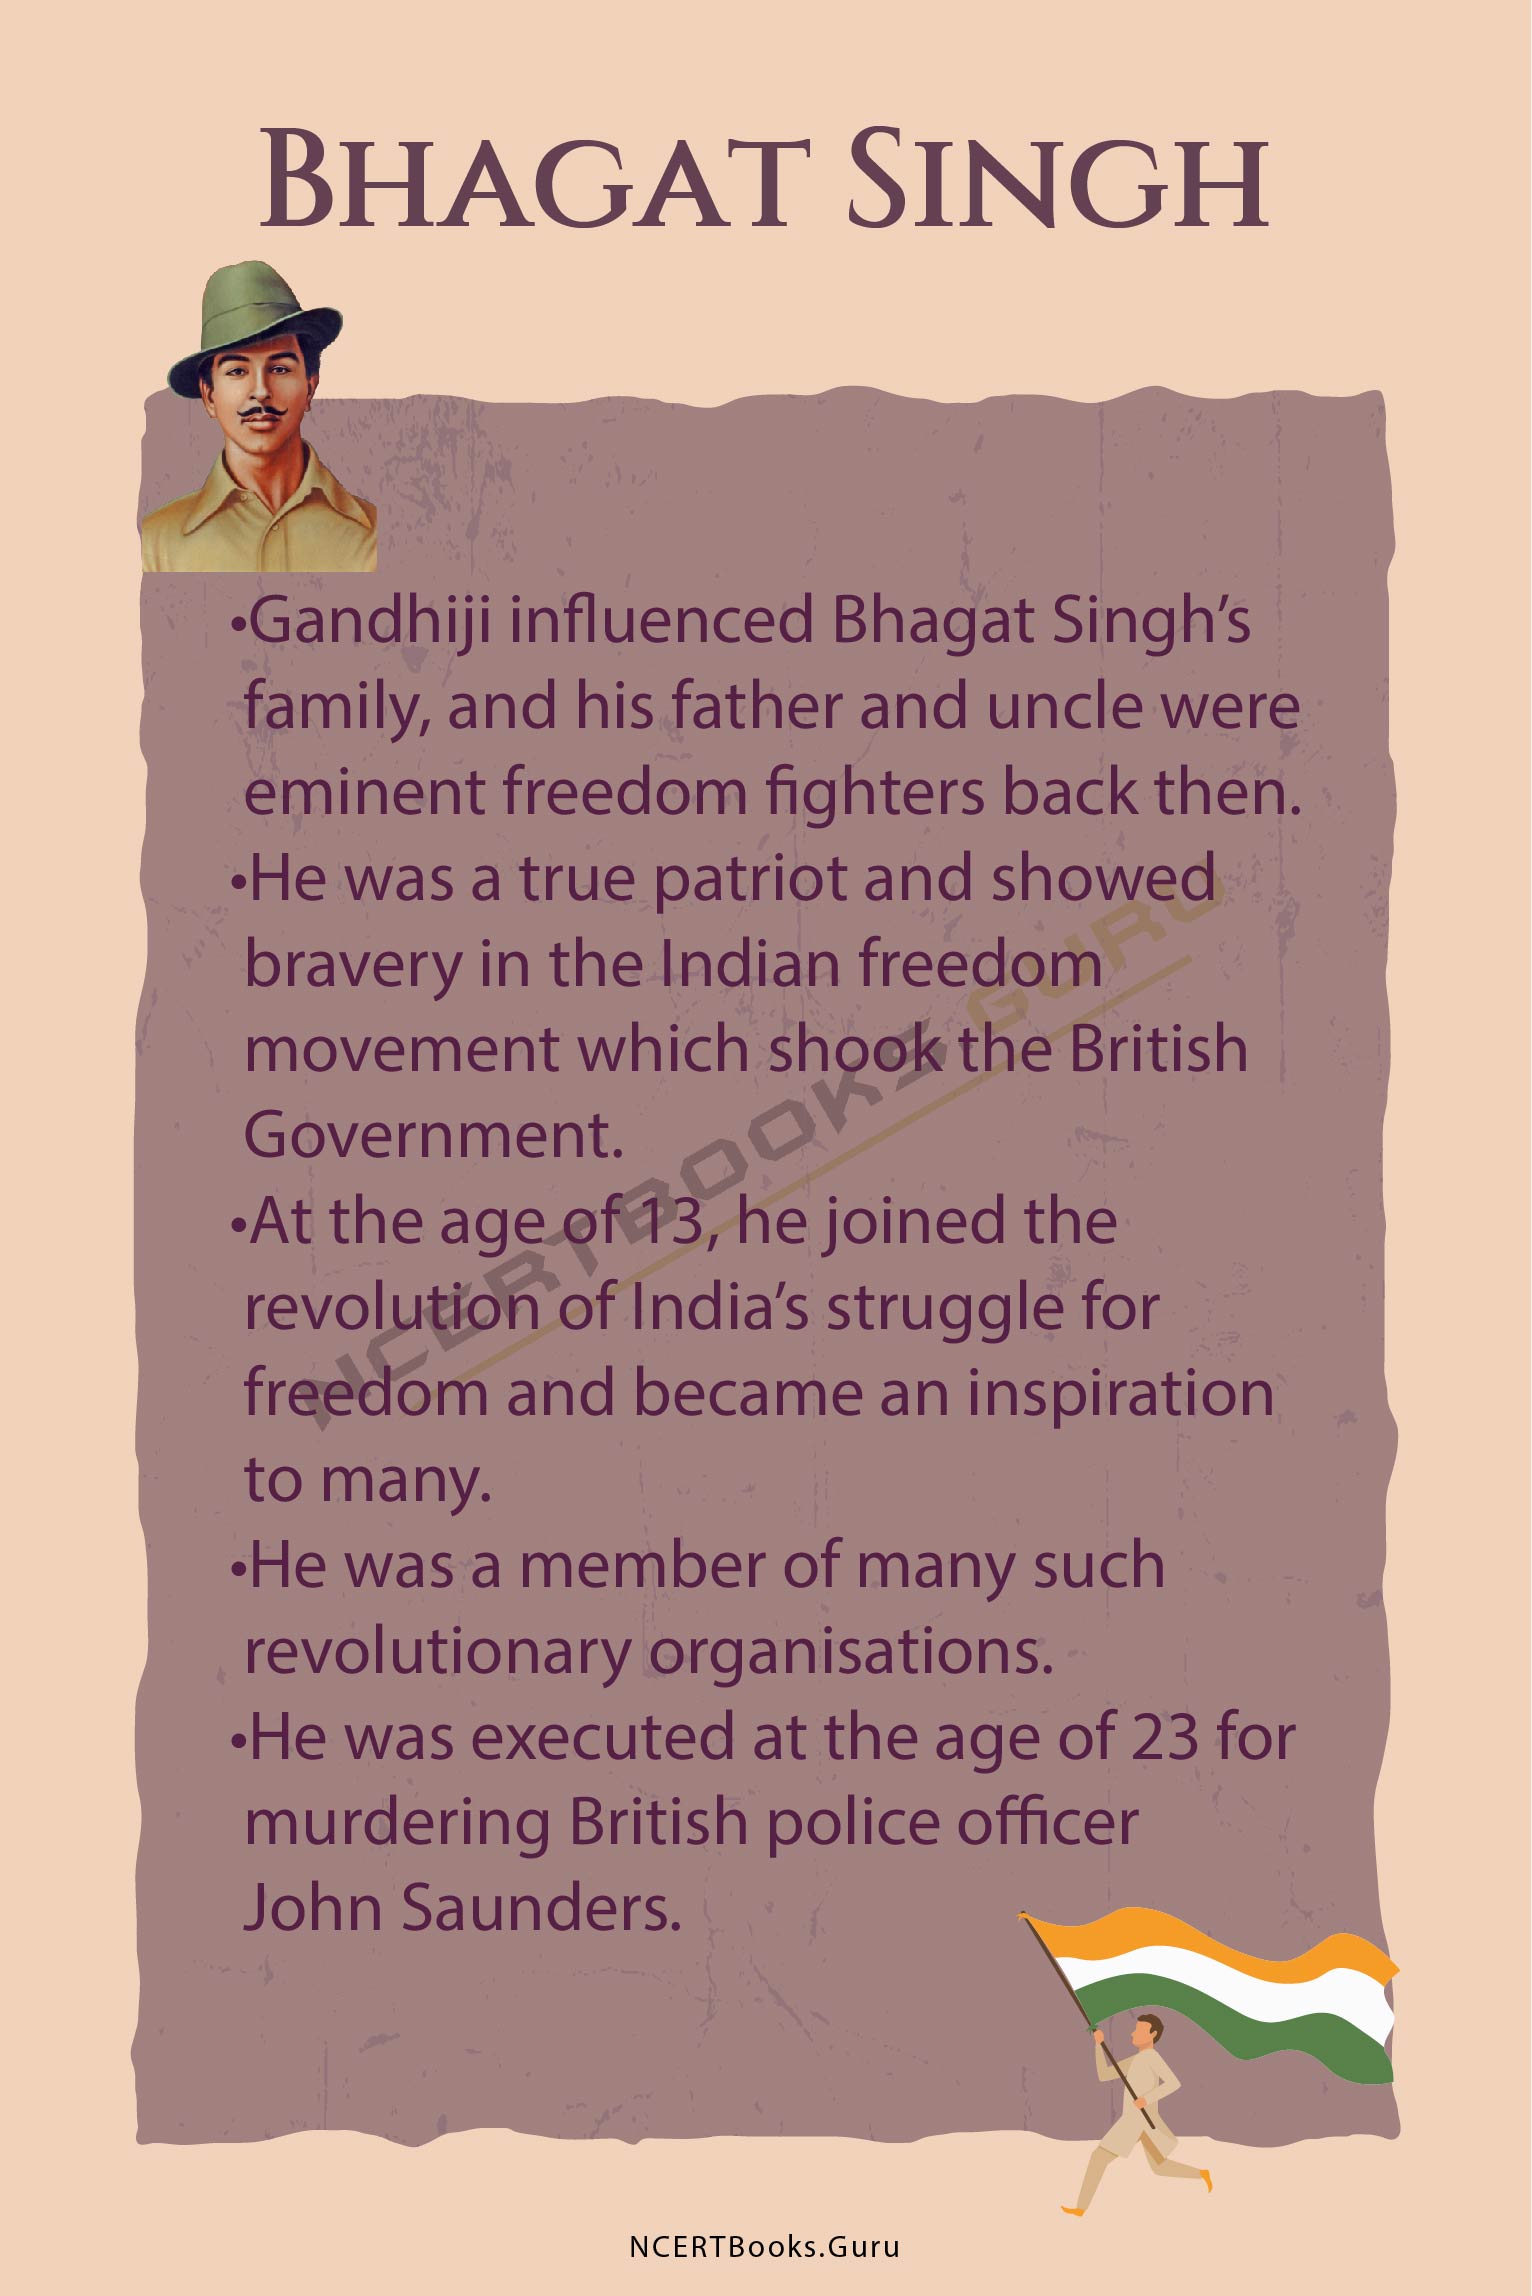 write short essay on Bhagat Singh in 500 words. - Brainly.in